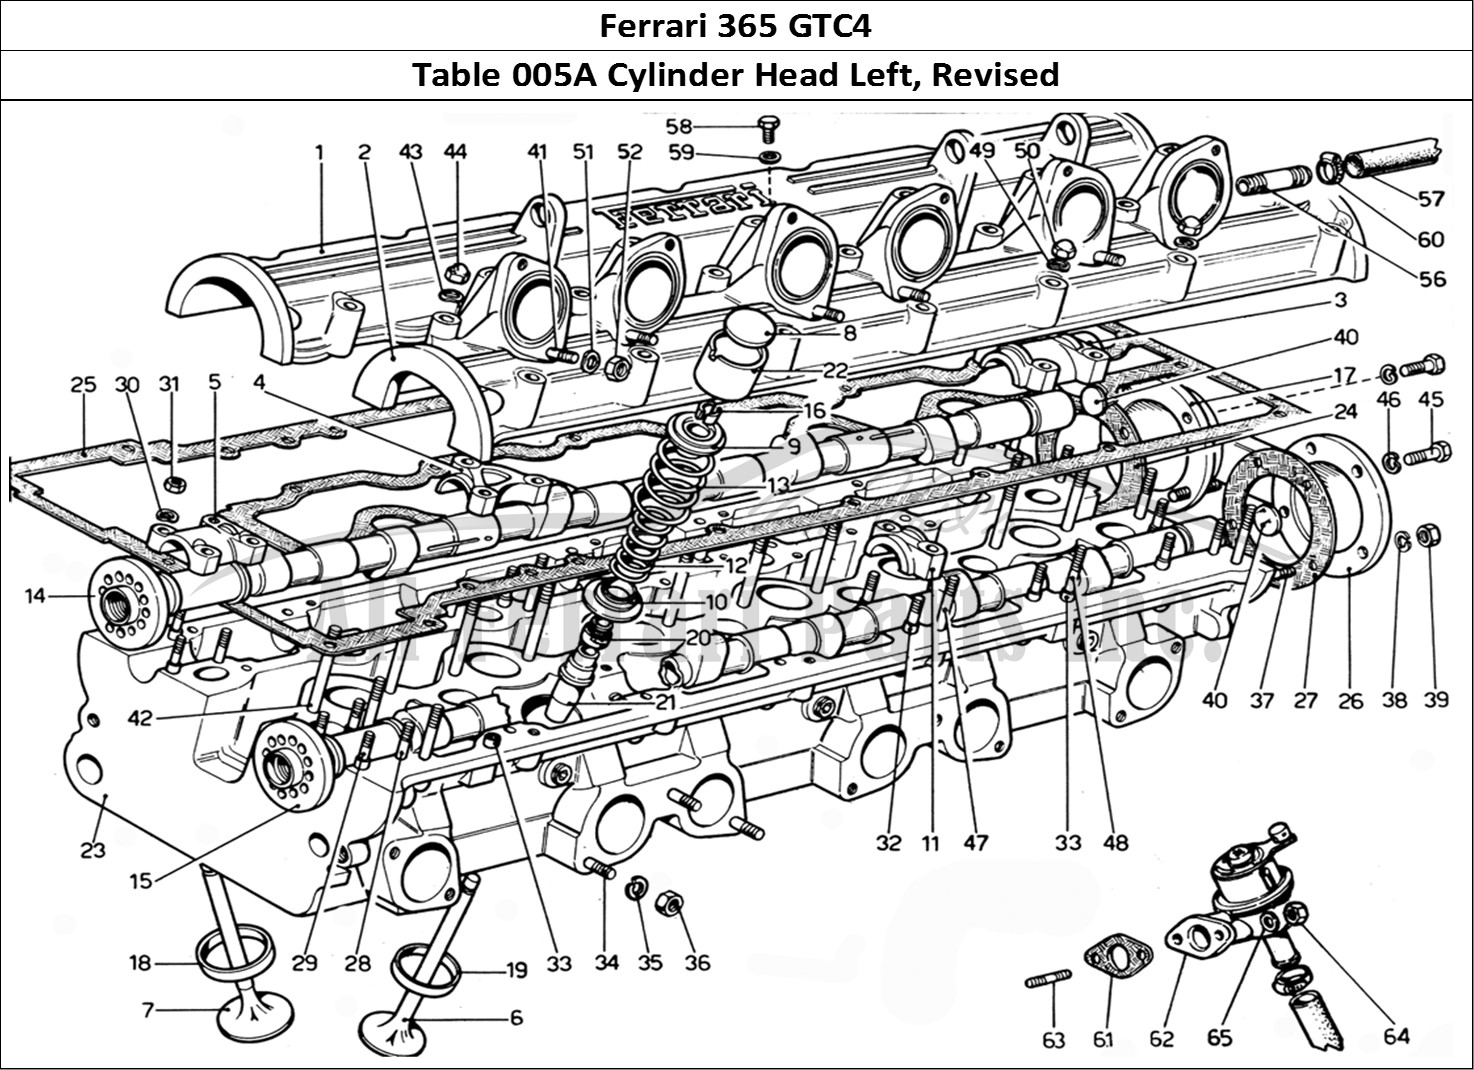 Ferrari Parts Ferrari 365 GTC4 (Mechanical) Page 005 Cylinder head LHS - Revis